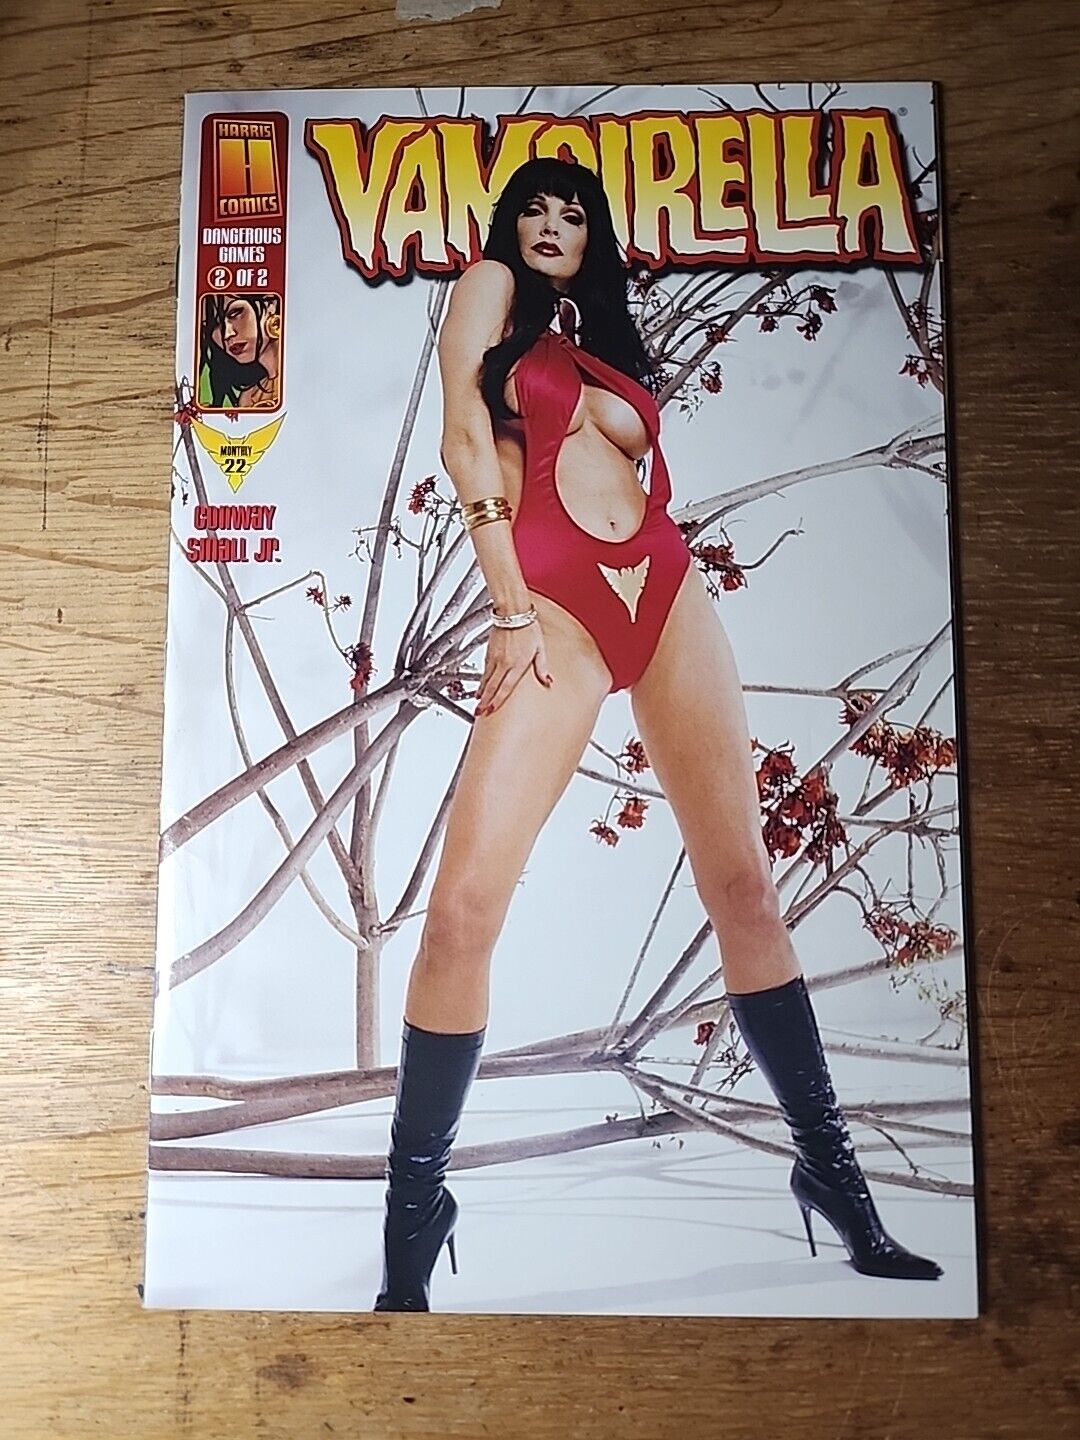 Vampirella Dangerous Games Issue 2 - Julie Strain photo cover Harris Comics